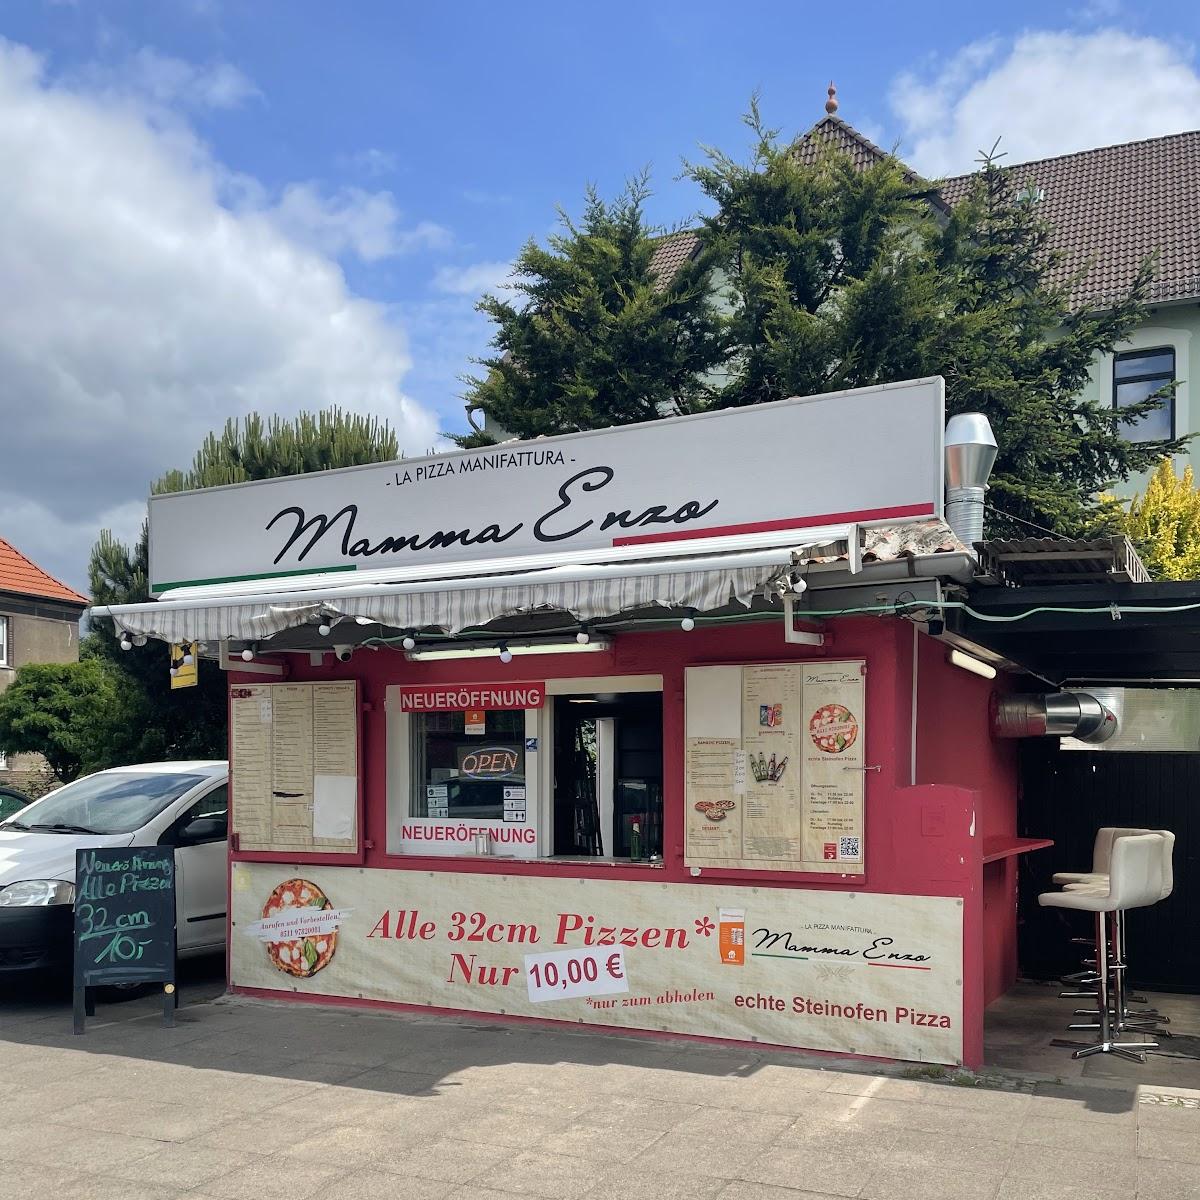 Restaurant "Mamma Enzo - Steinofenpizza" in Hannover